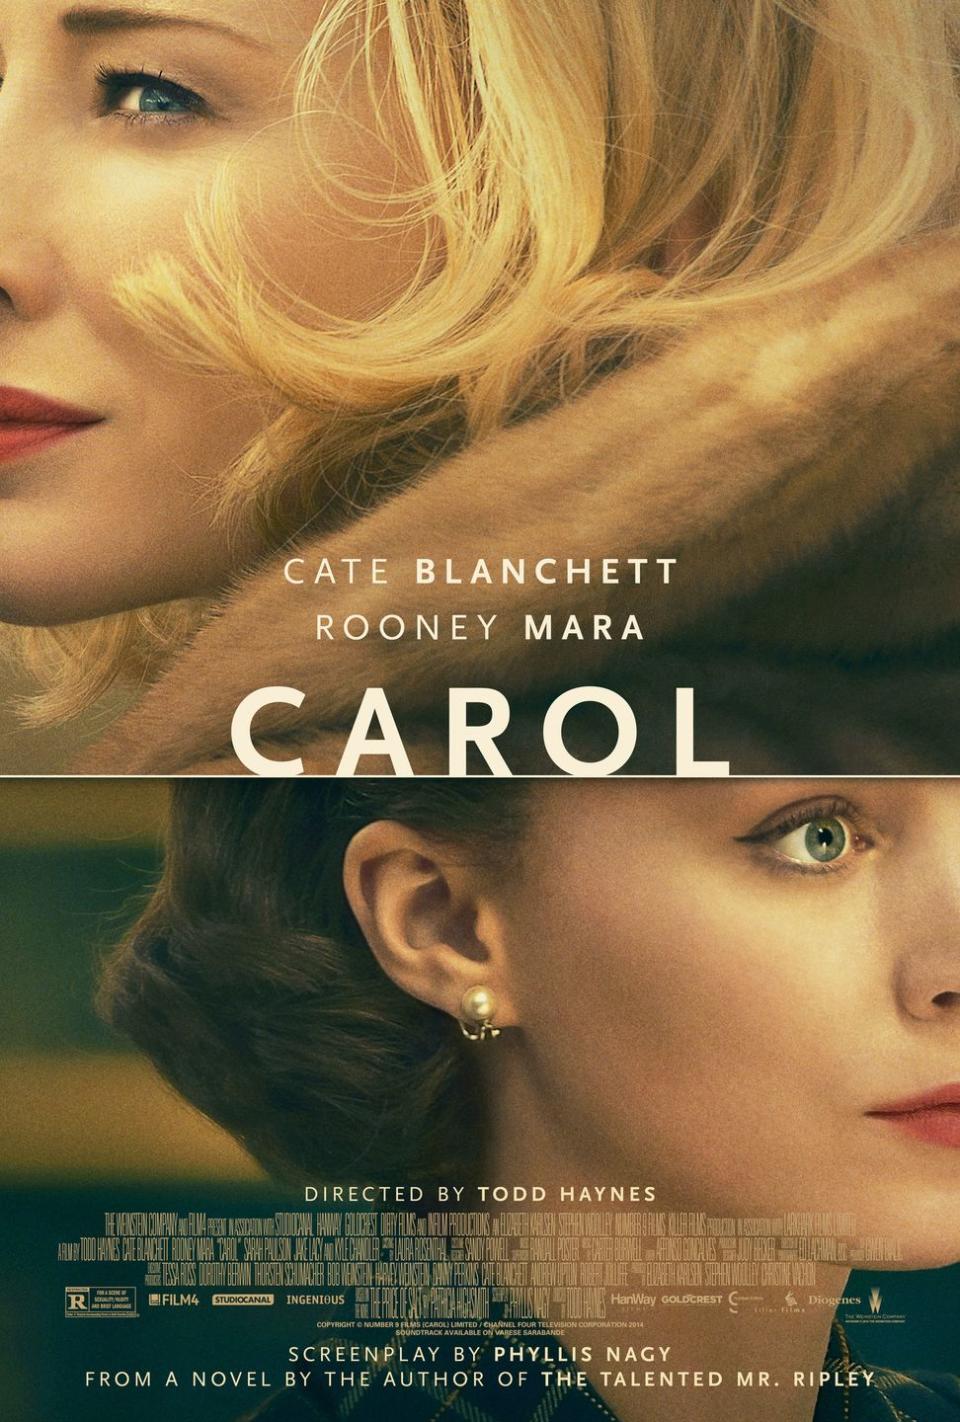 Carol (2013)